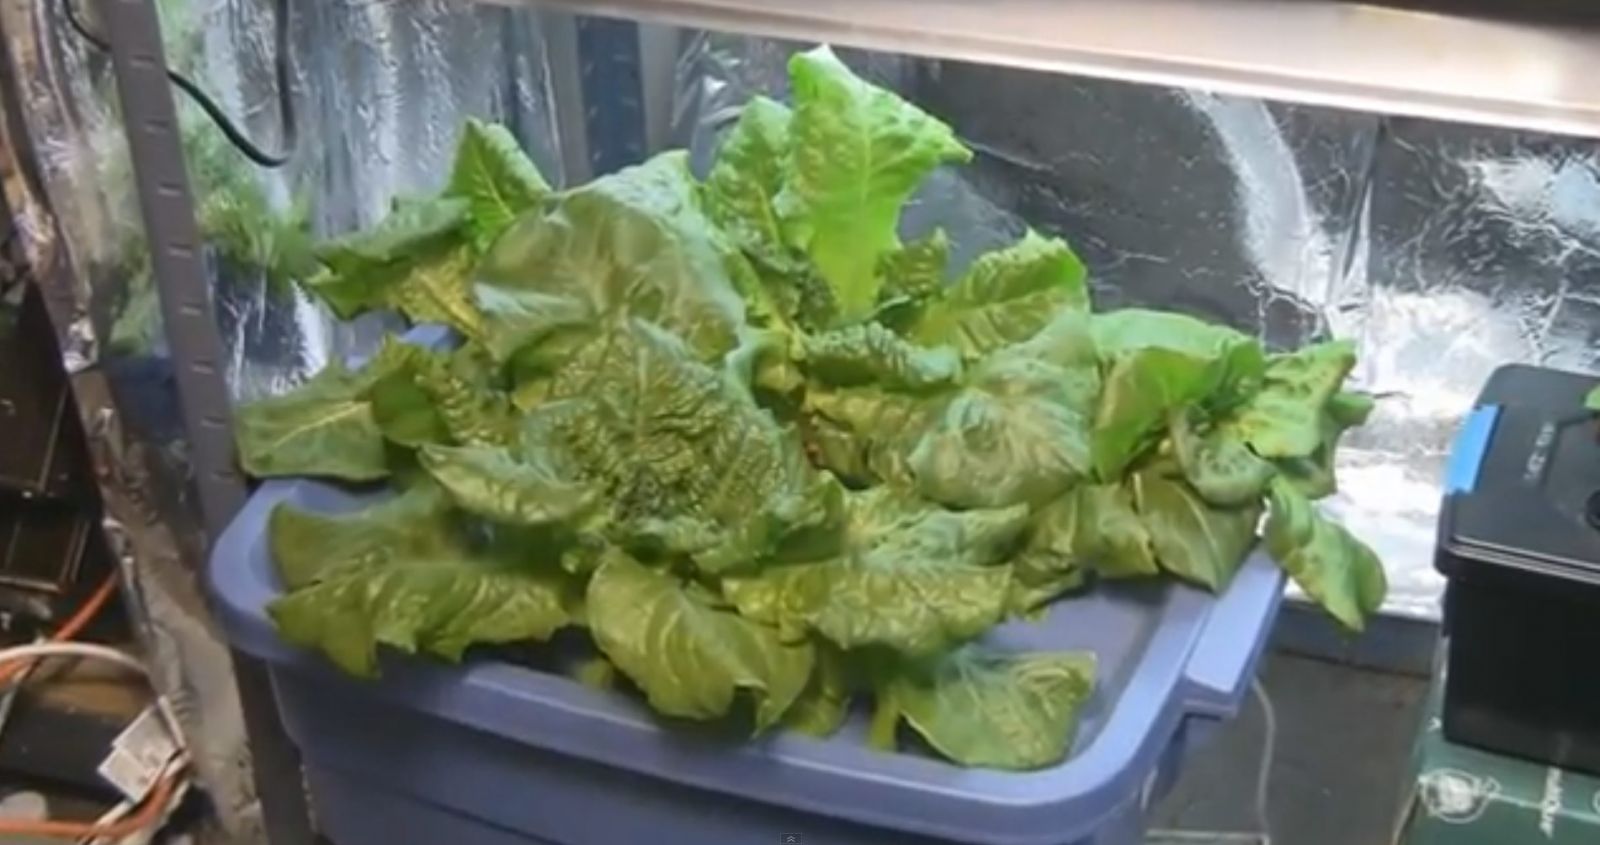 Growing lettuce under grow lights | Tomorrow's Garden